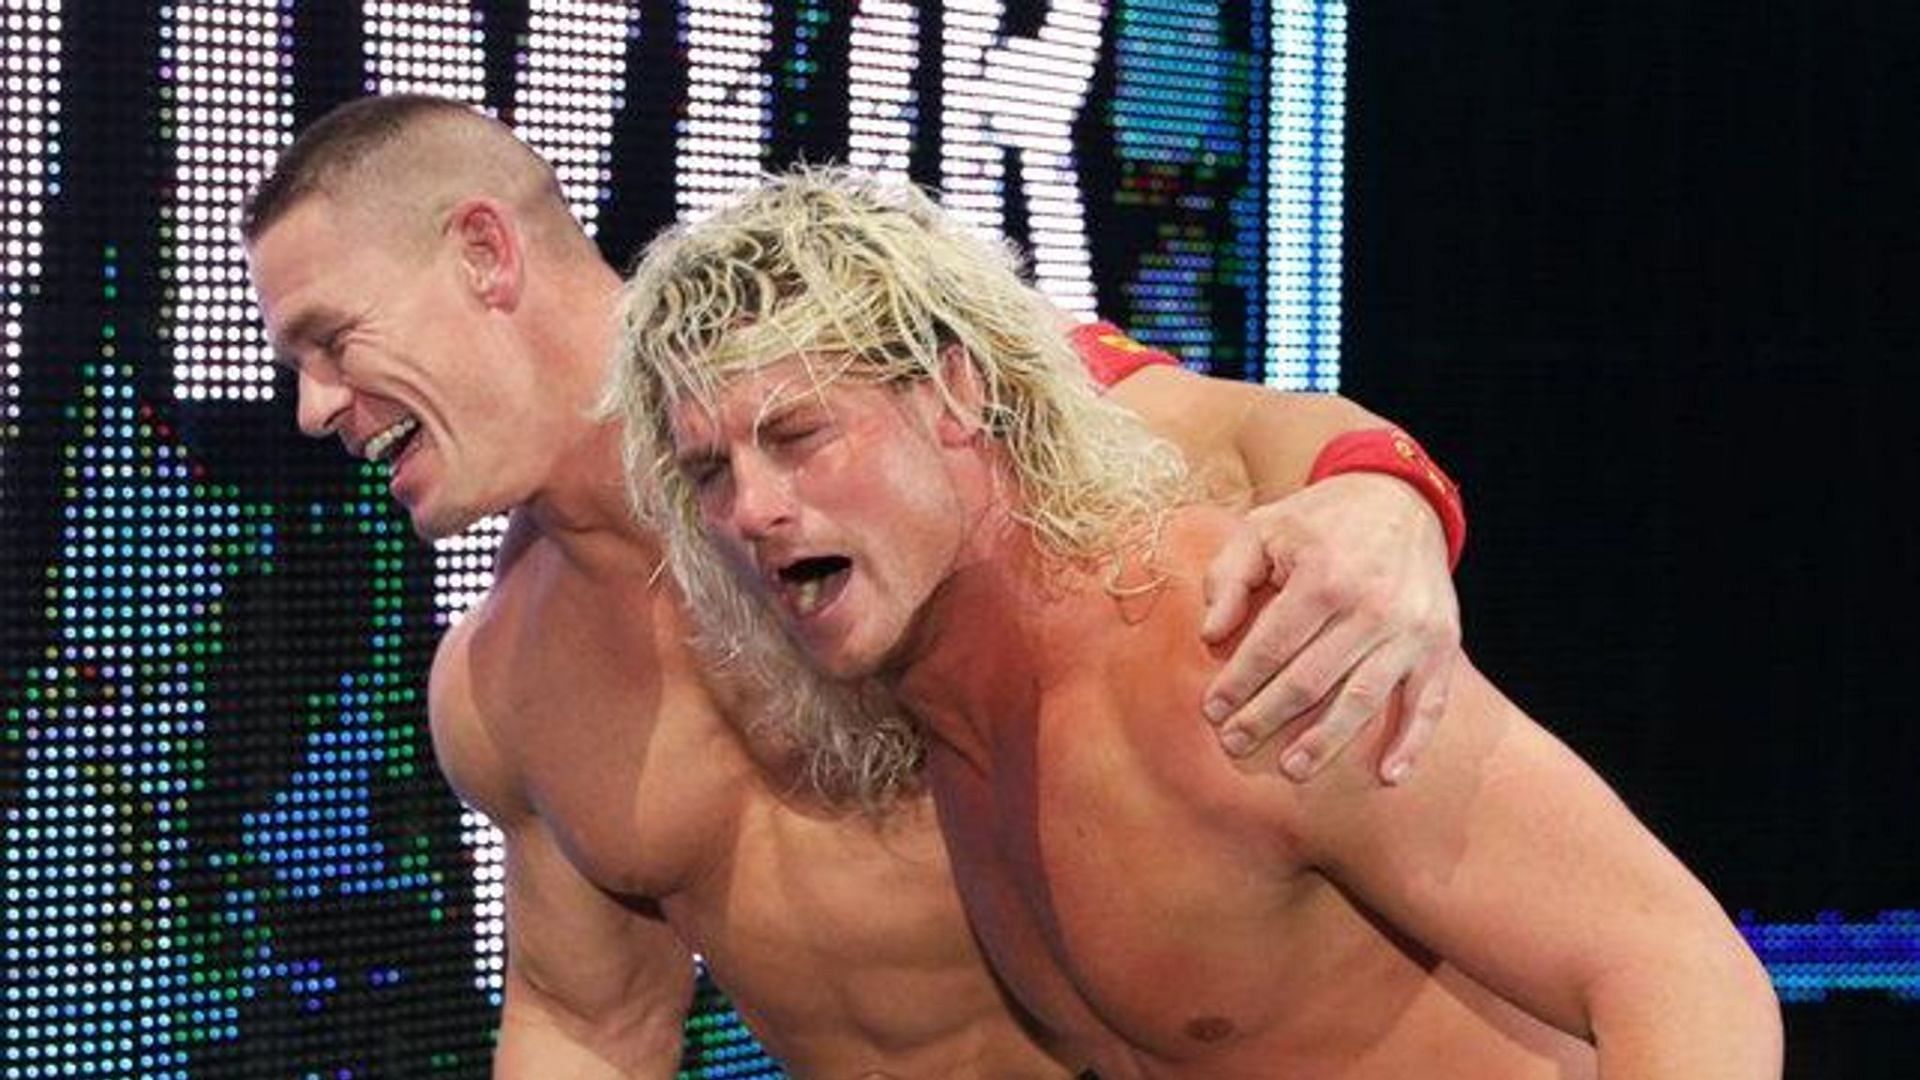 Team Cena found an unlikely hero in their quest at Survivor Series